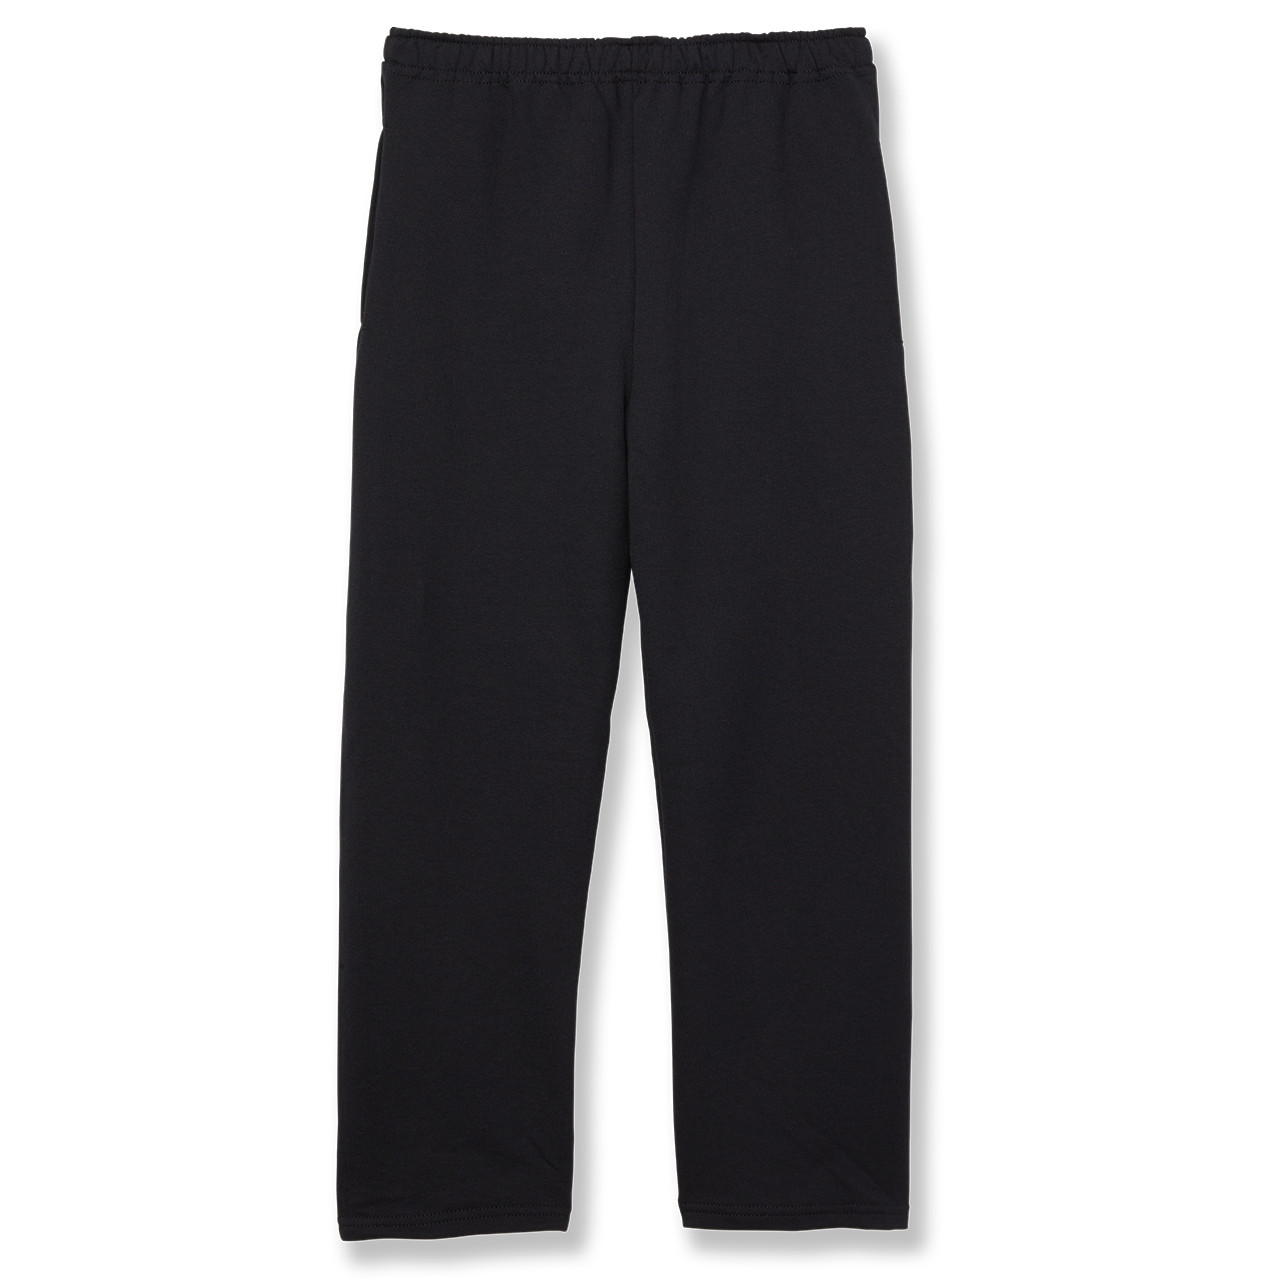 Open Bottom Sweatpants with heat transferred logo [DC034-974-BLACK]